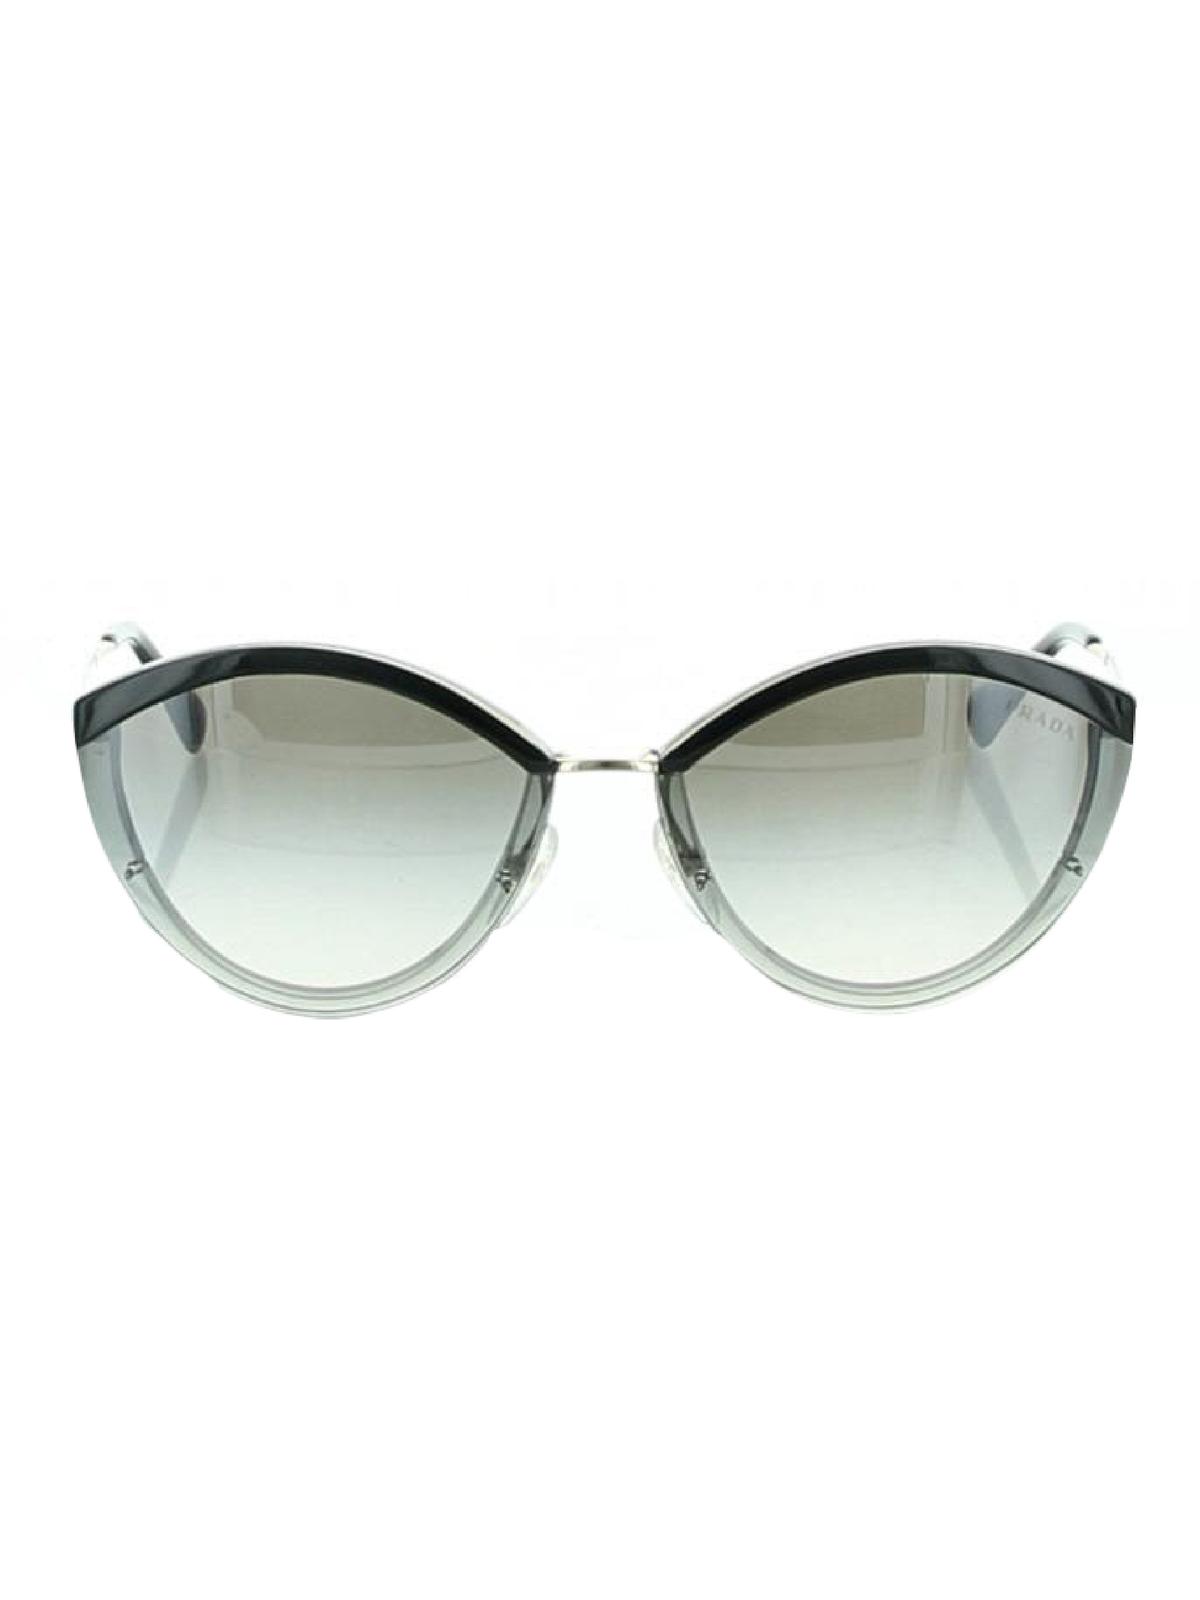 Prada Womens UV Protection Round Cat Eye Fashion Sunglasses Gray 63mm - image 2 of 3